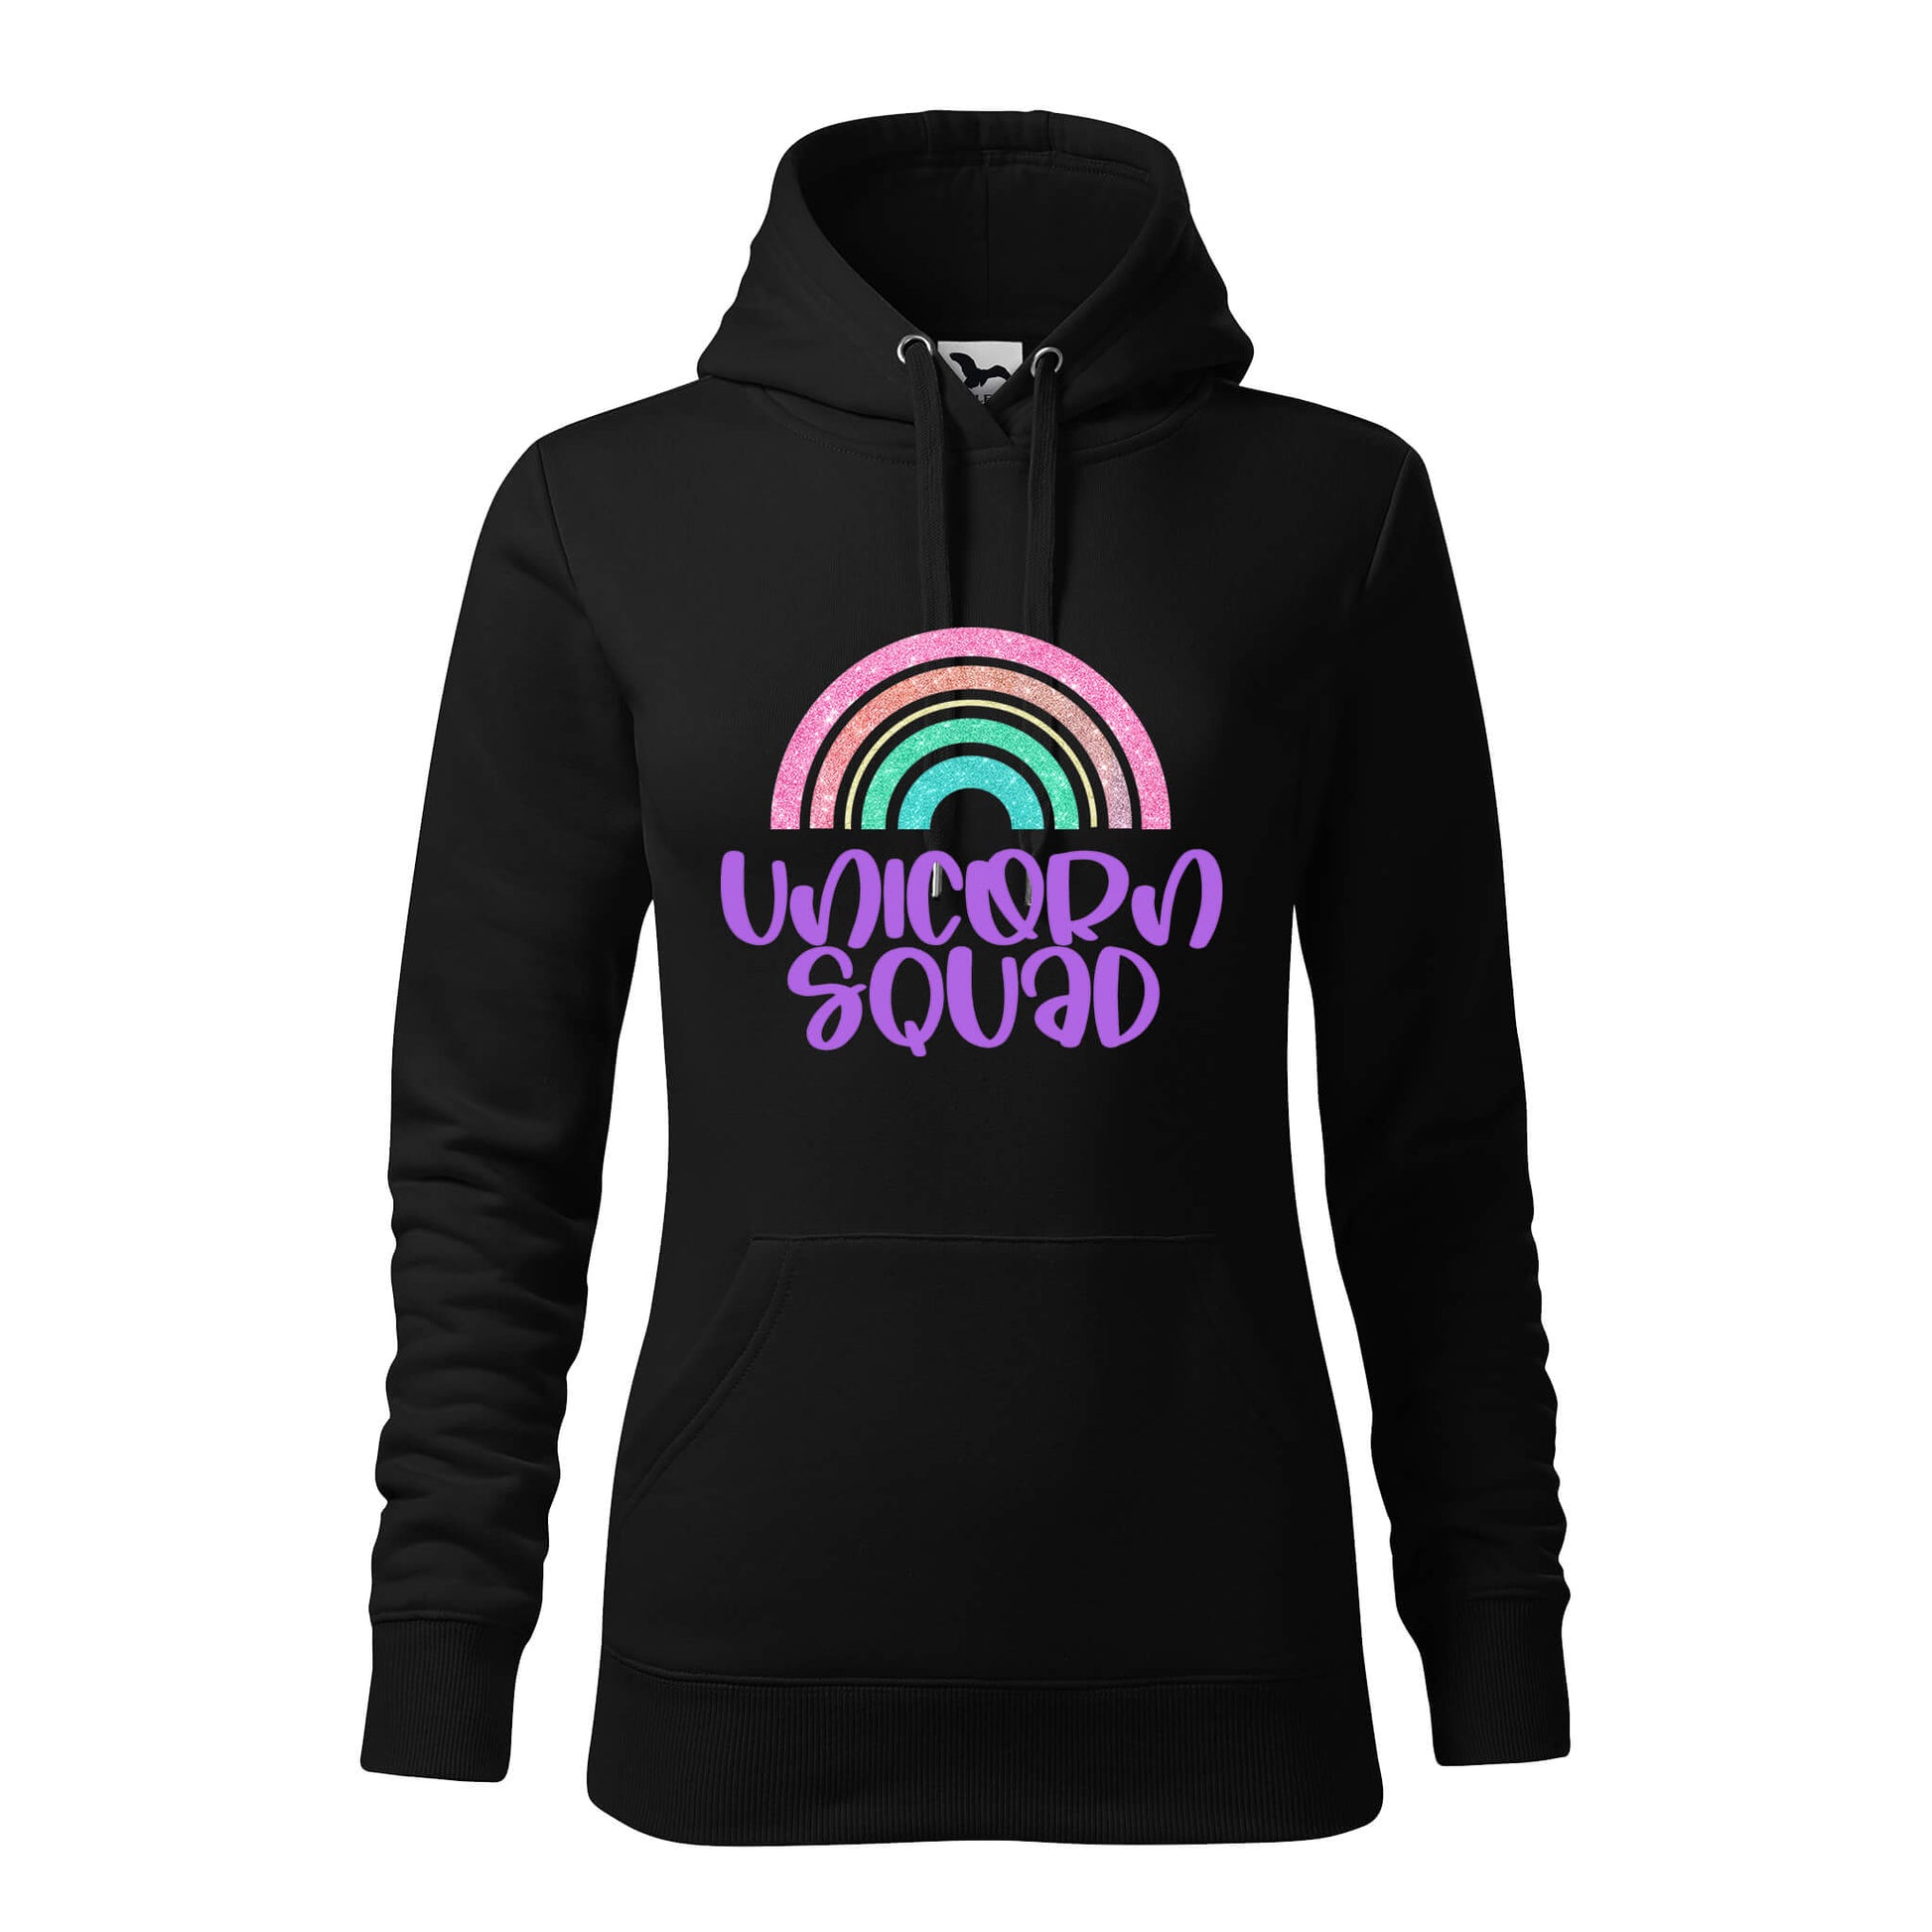 Unicorn squad hoodie - rvdesignprint